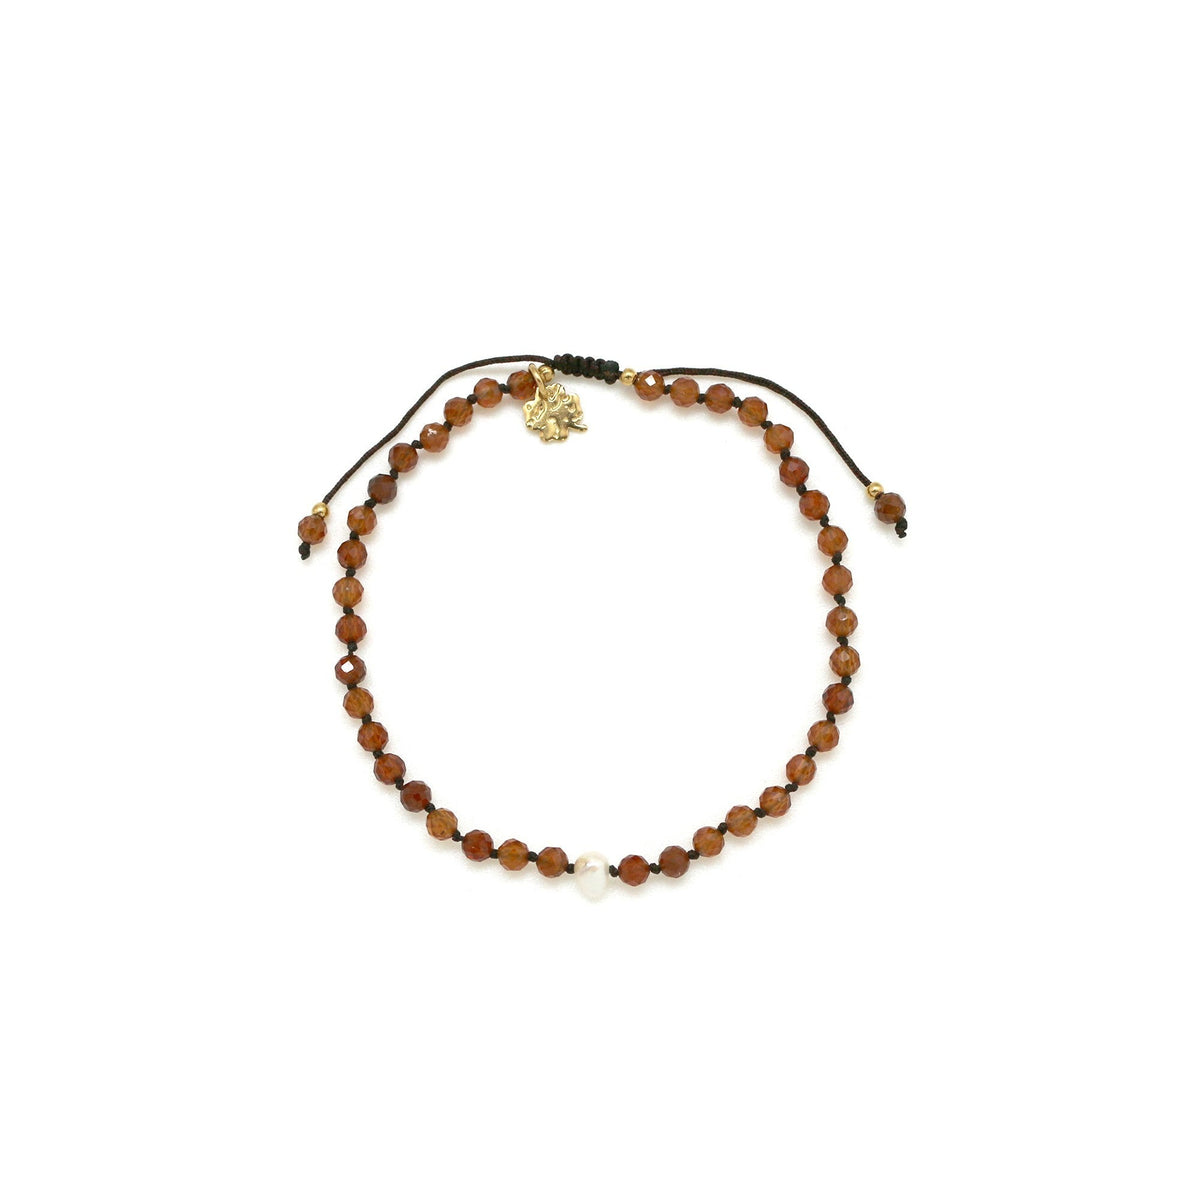 Adjustable garnet bracelet with water pearl